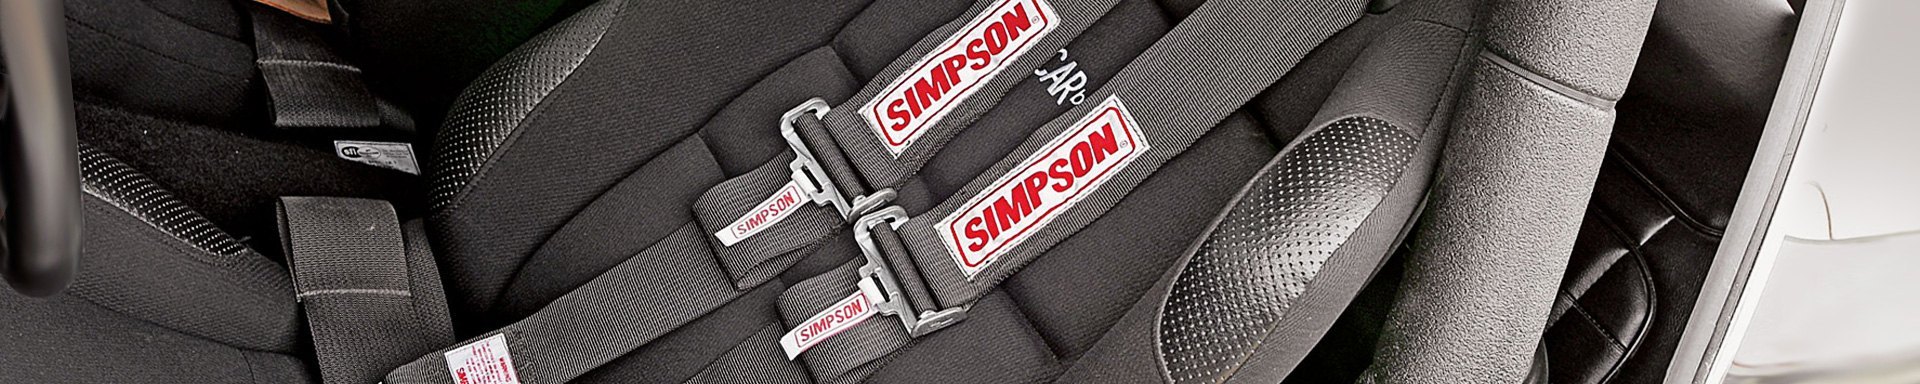 Simpson Seats